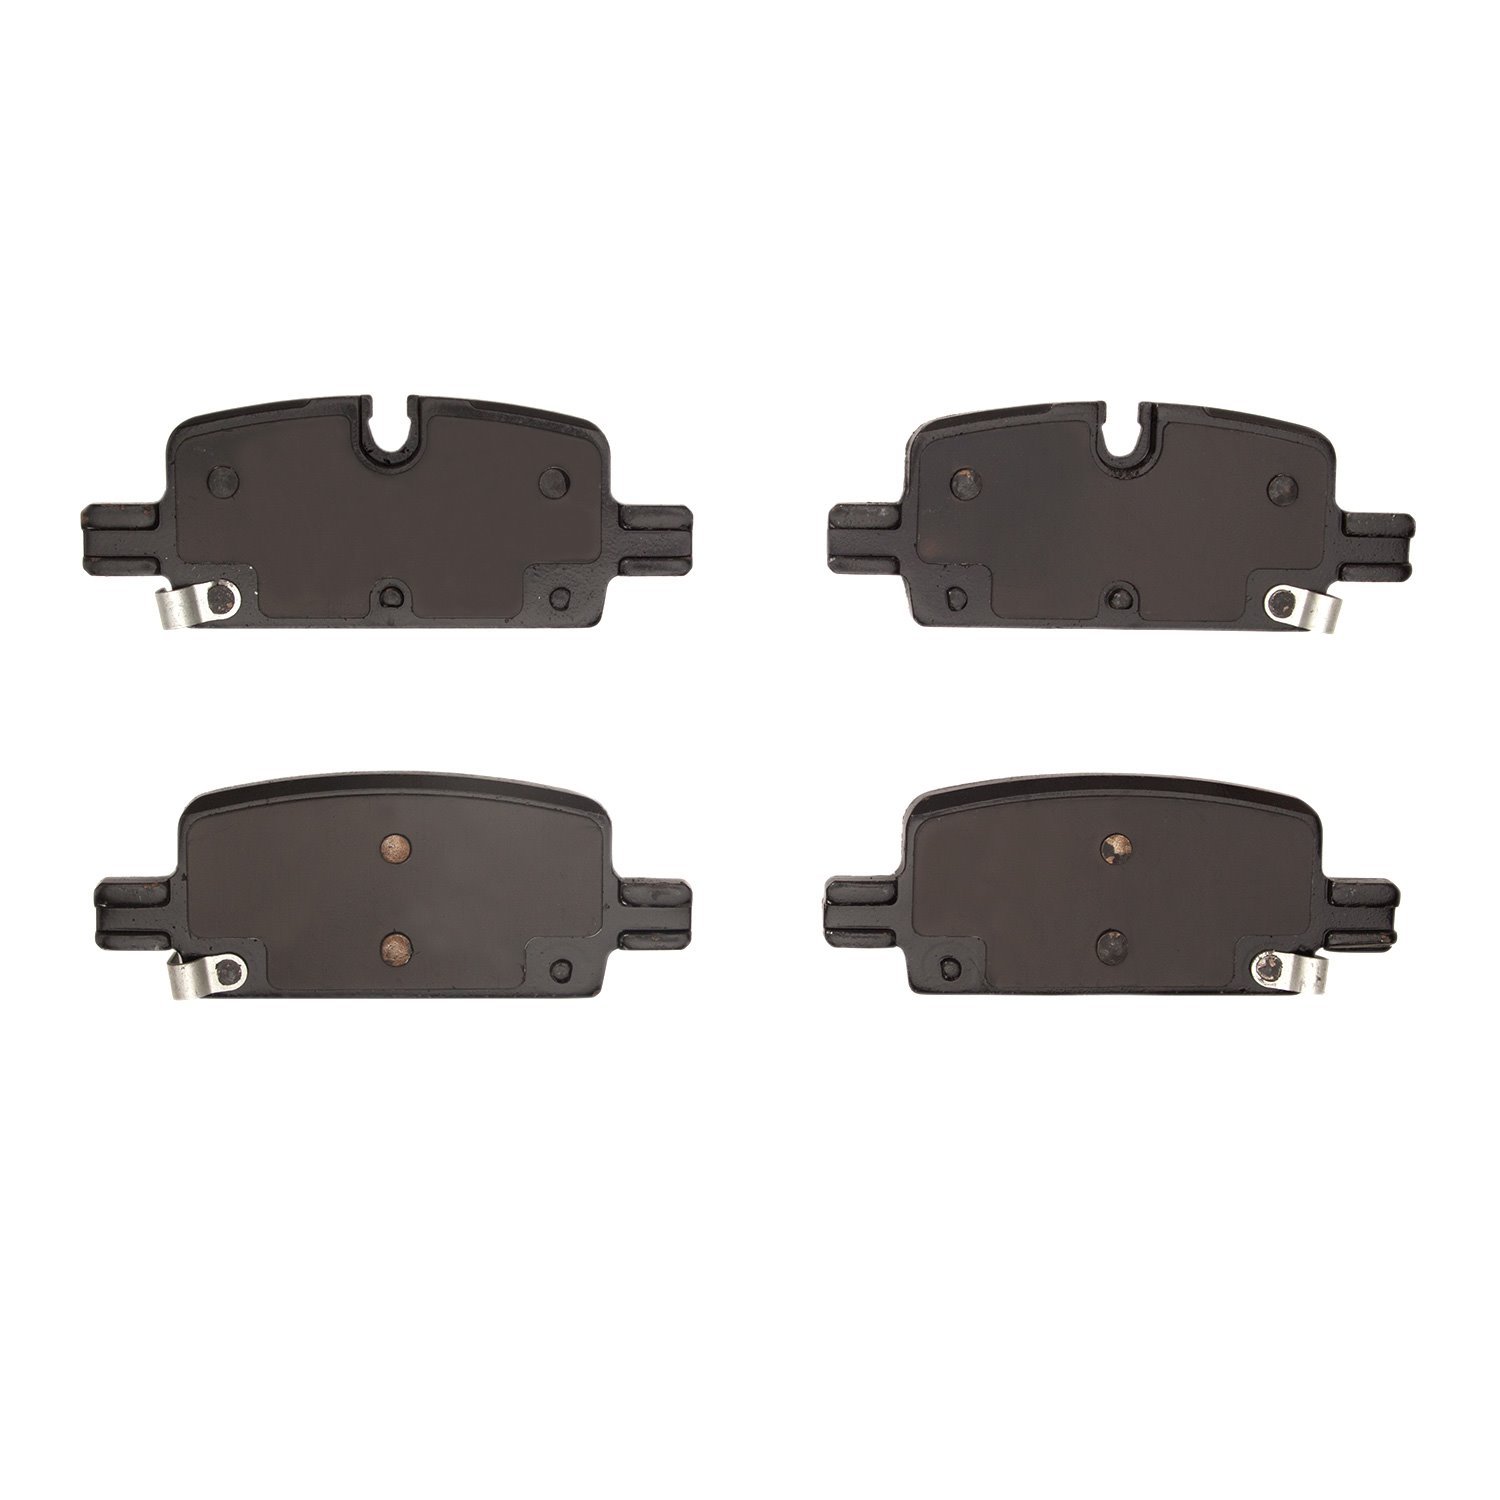 1310-2174-00 3000-Series Ceramic Brake Pads, Fits Select Multiple Makes/Models, Position: Rear,Rr